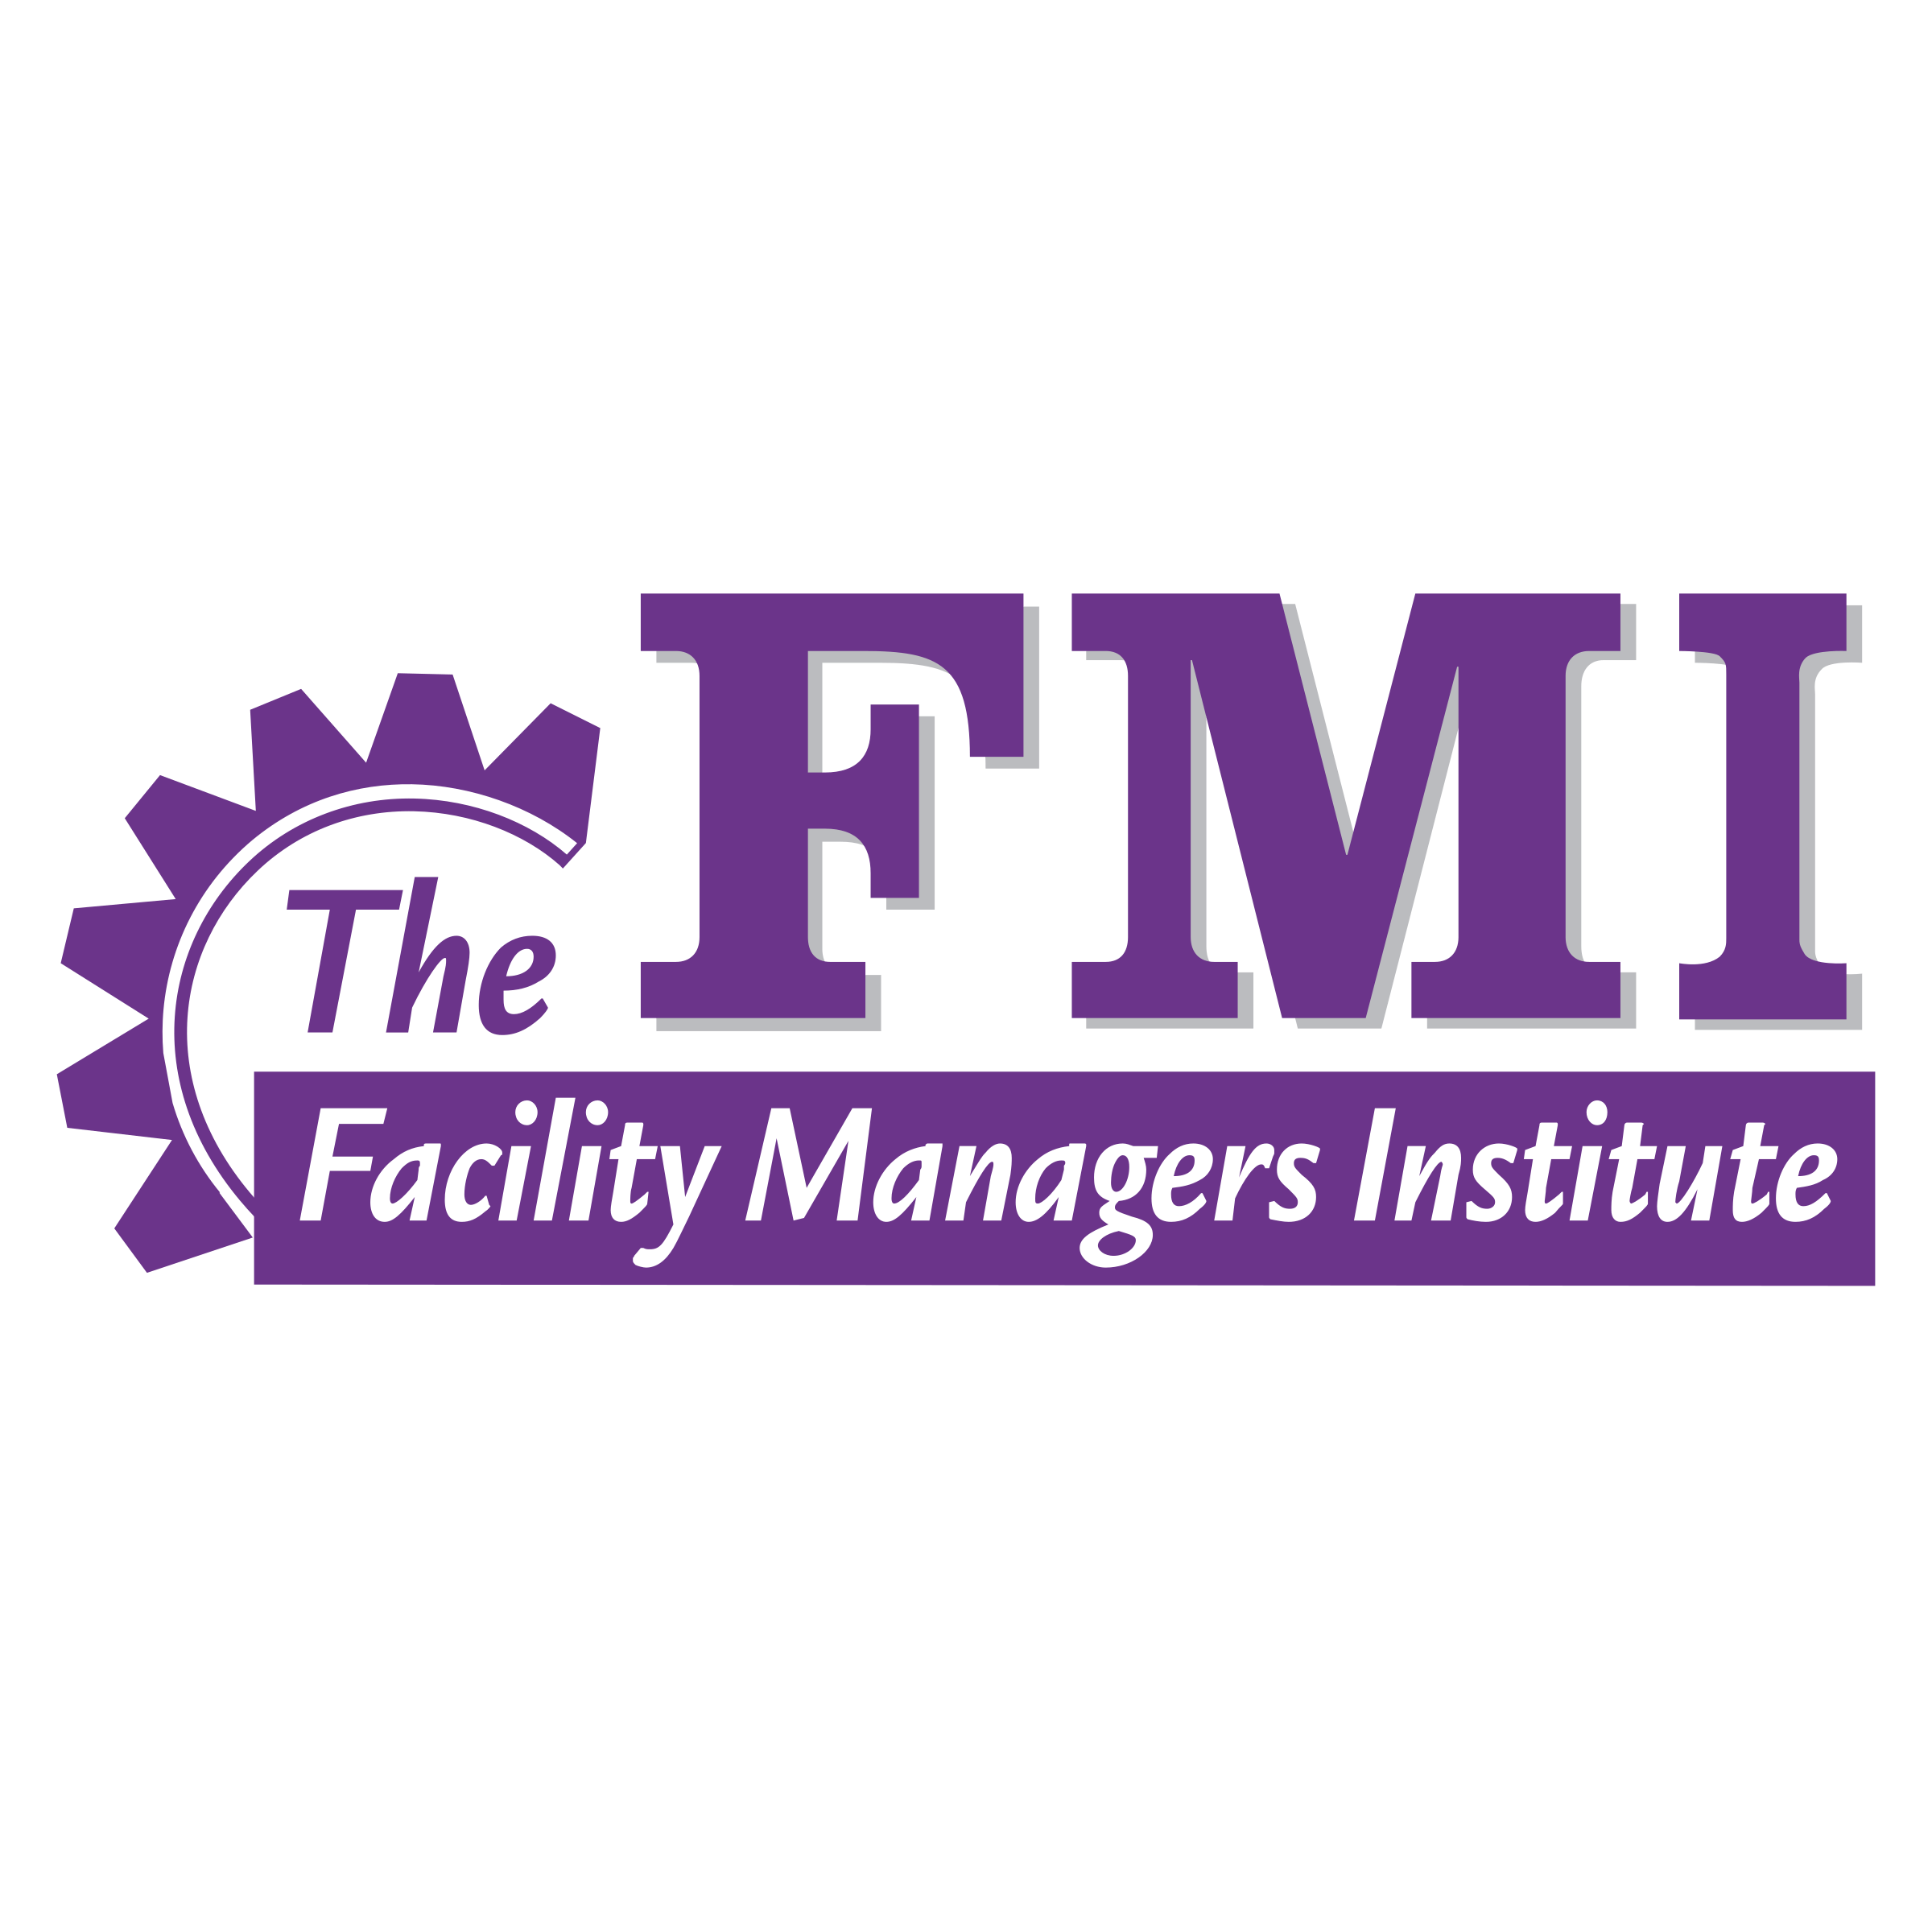 FMI Logo - FMI Logo PNG Transparent & SVG Vector - Freebie Supply